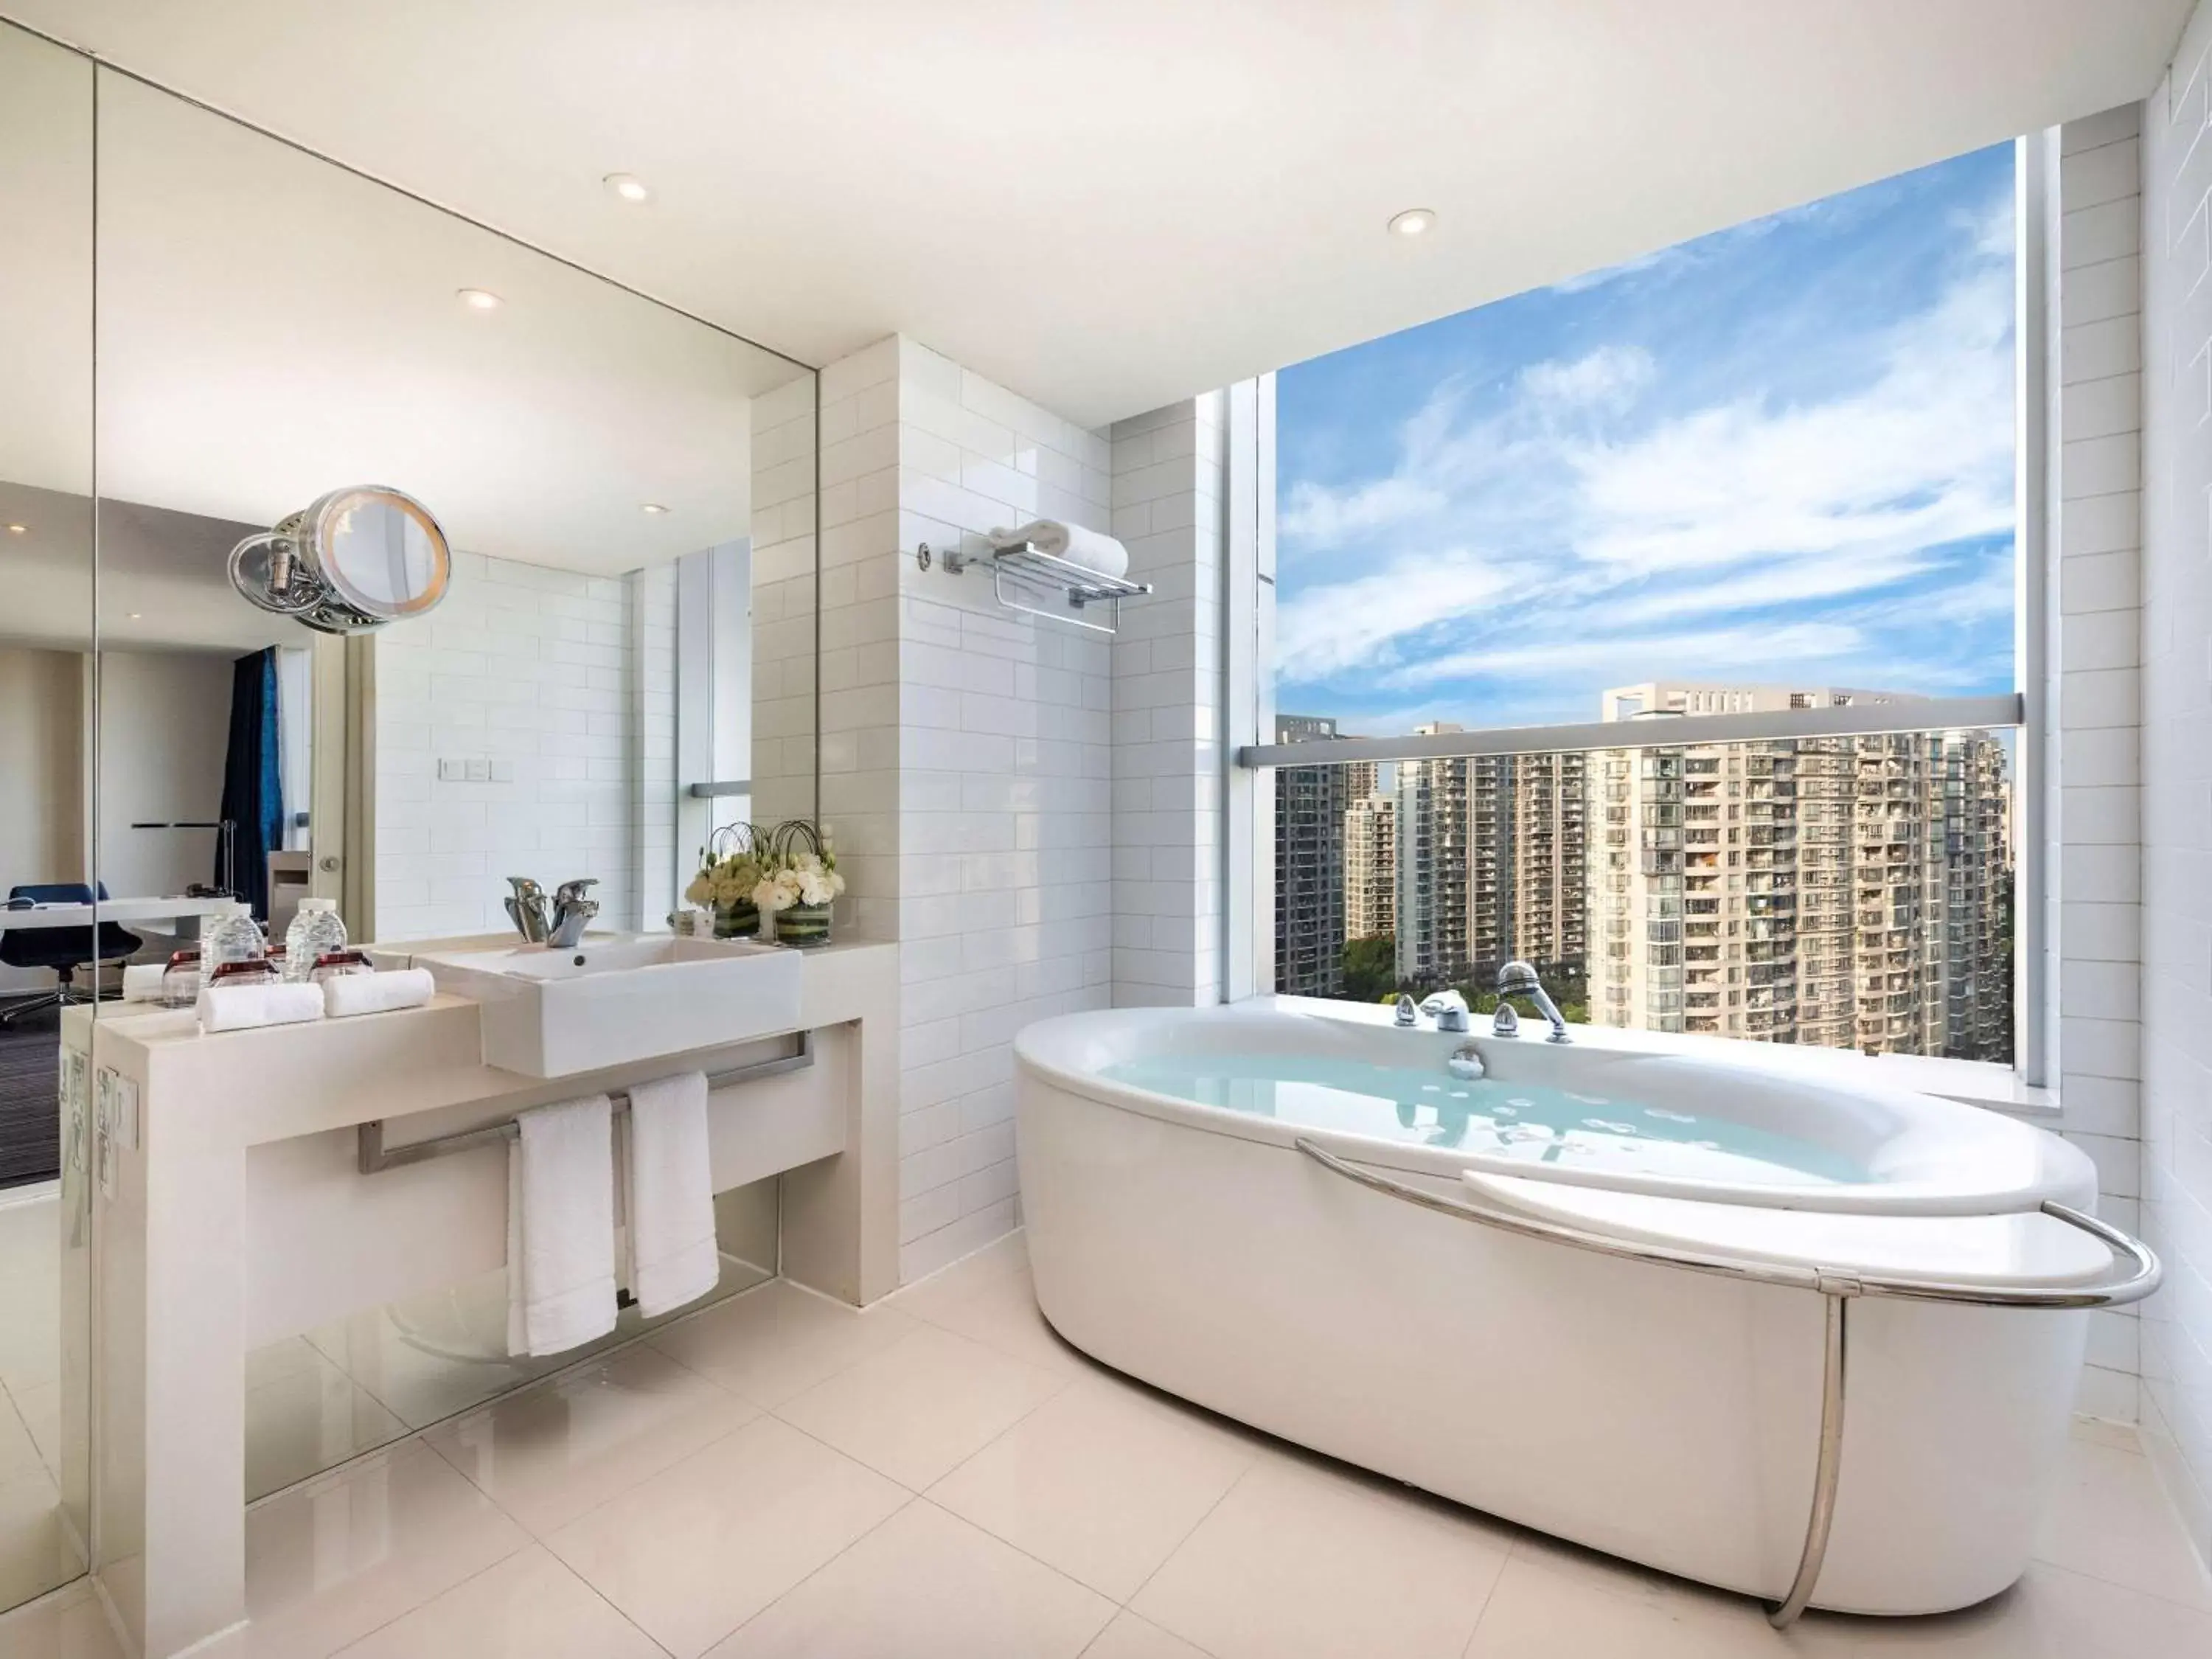 Photo of the whole room, Bathroom in Grand Mercure Shanghai Century Park